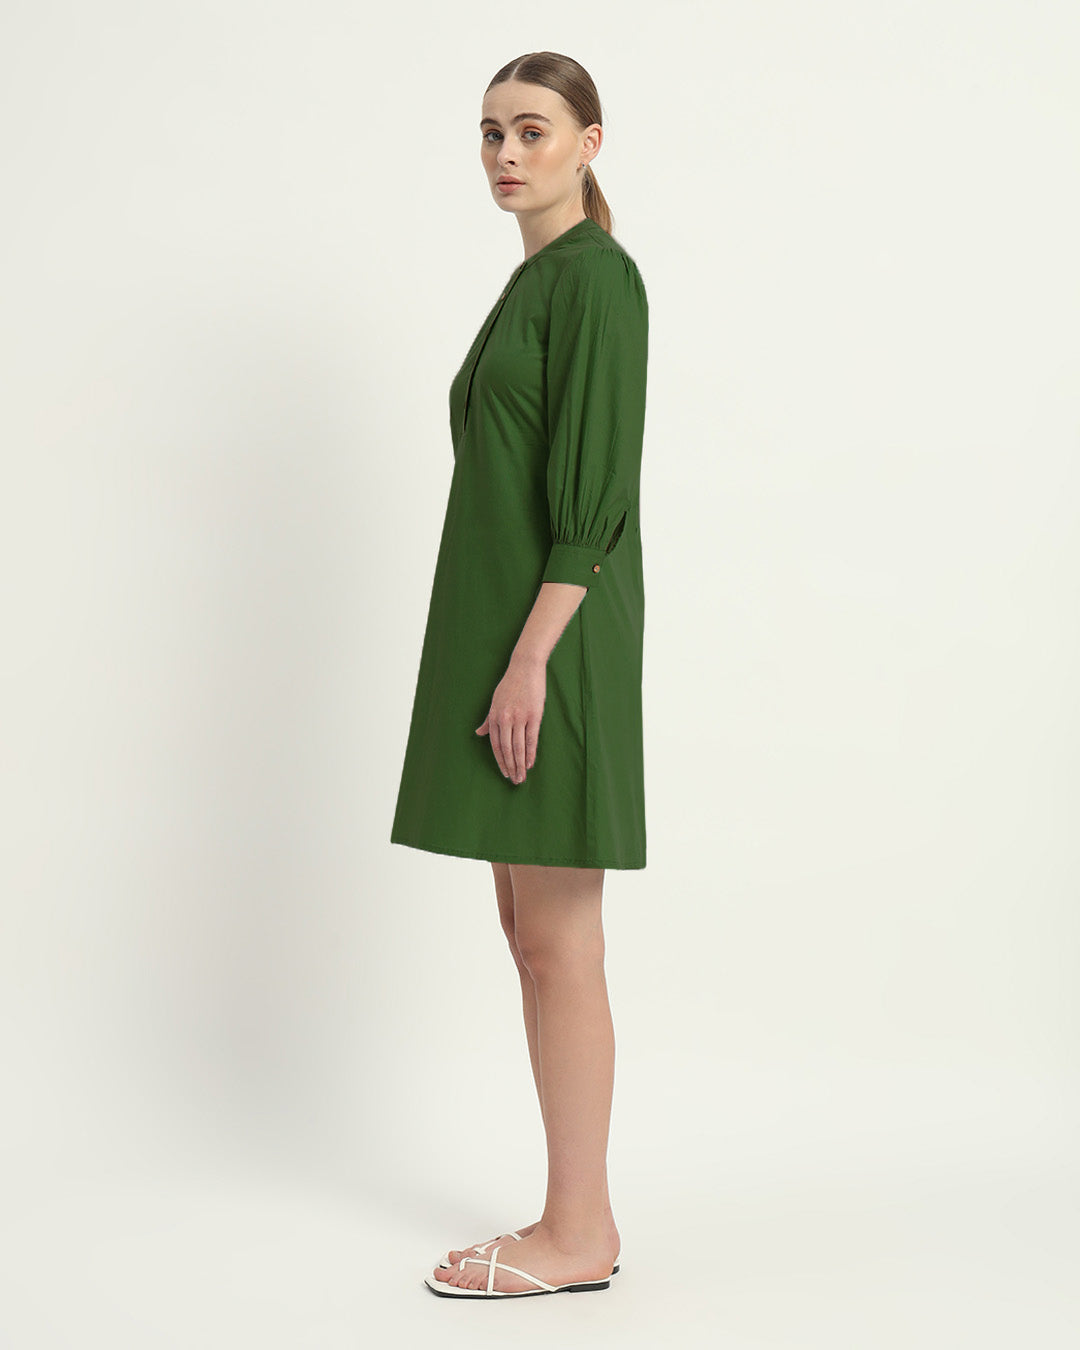 The Emerald Roslyn Cotton Dress